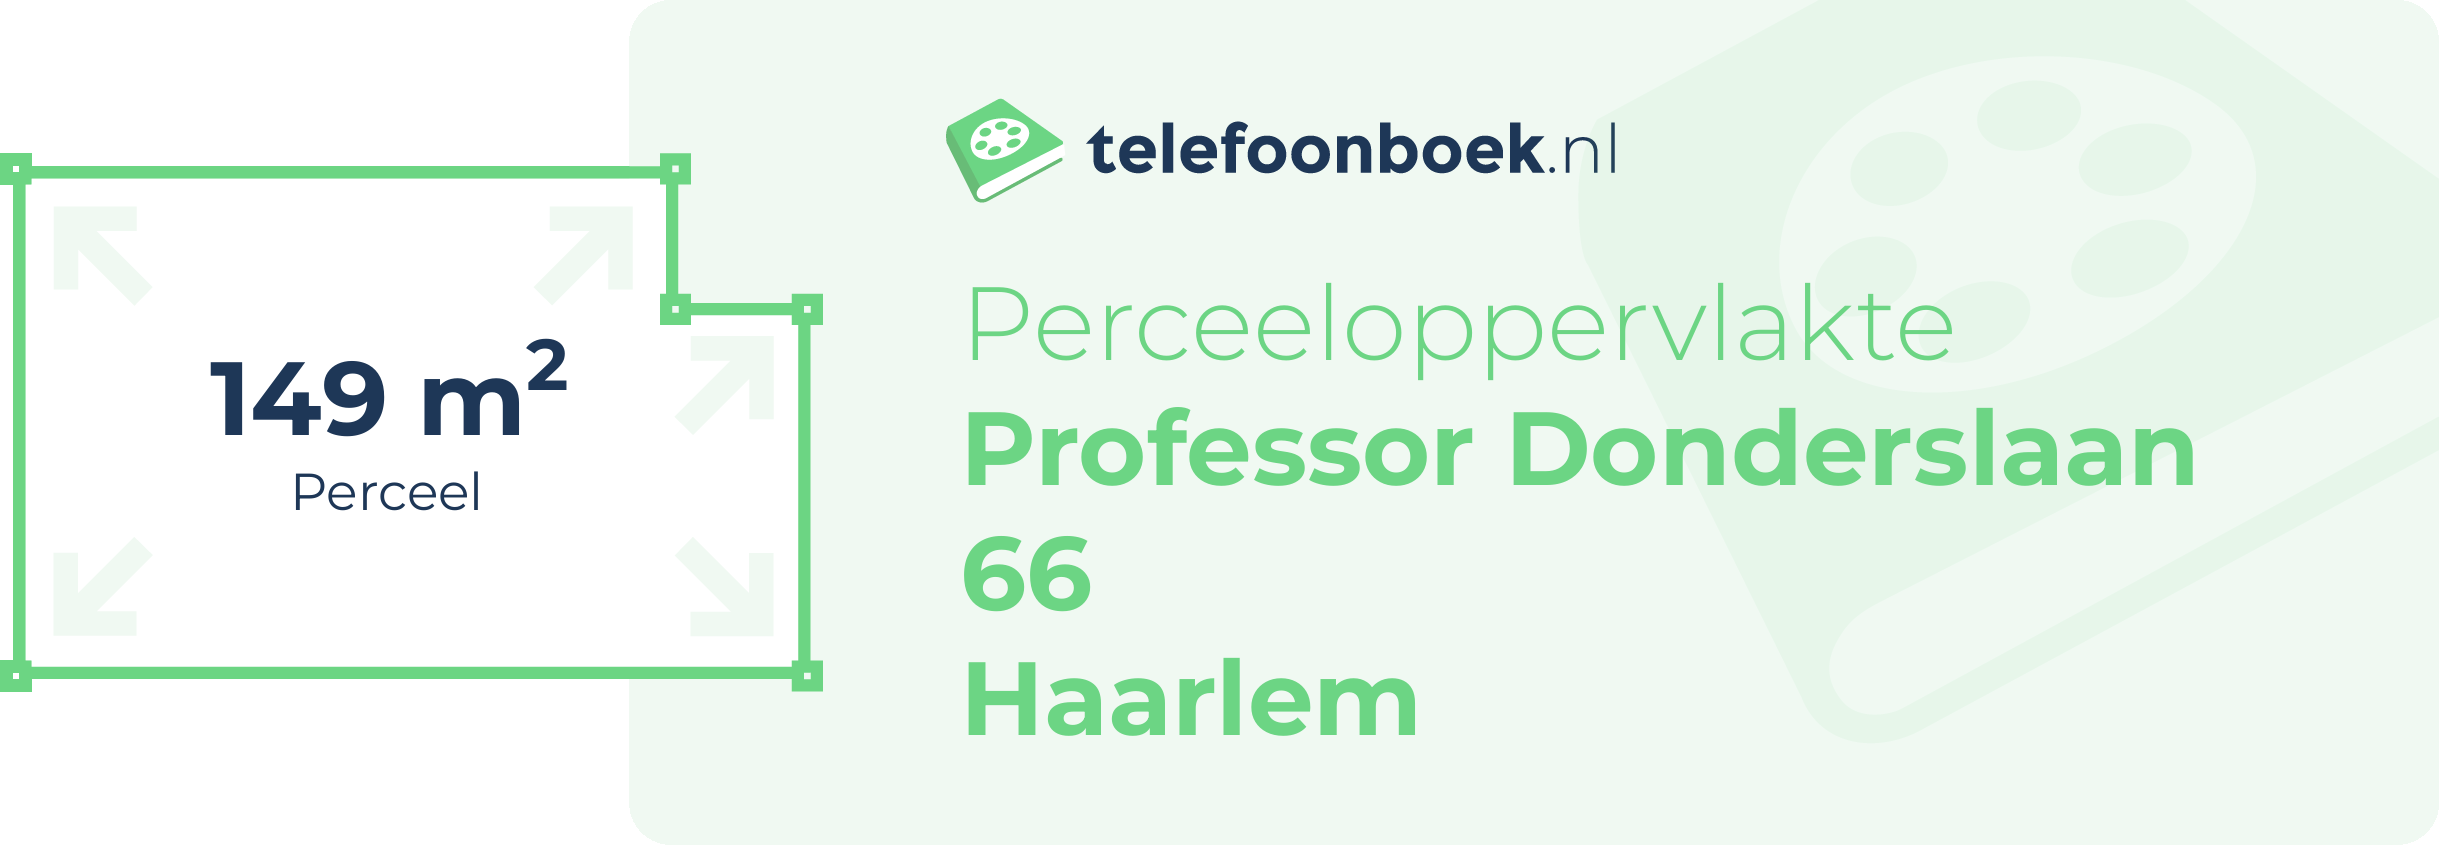 Perceeloppervlakte Professor Donderslaan 66 Haarlem